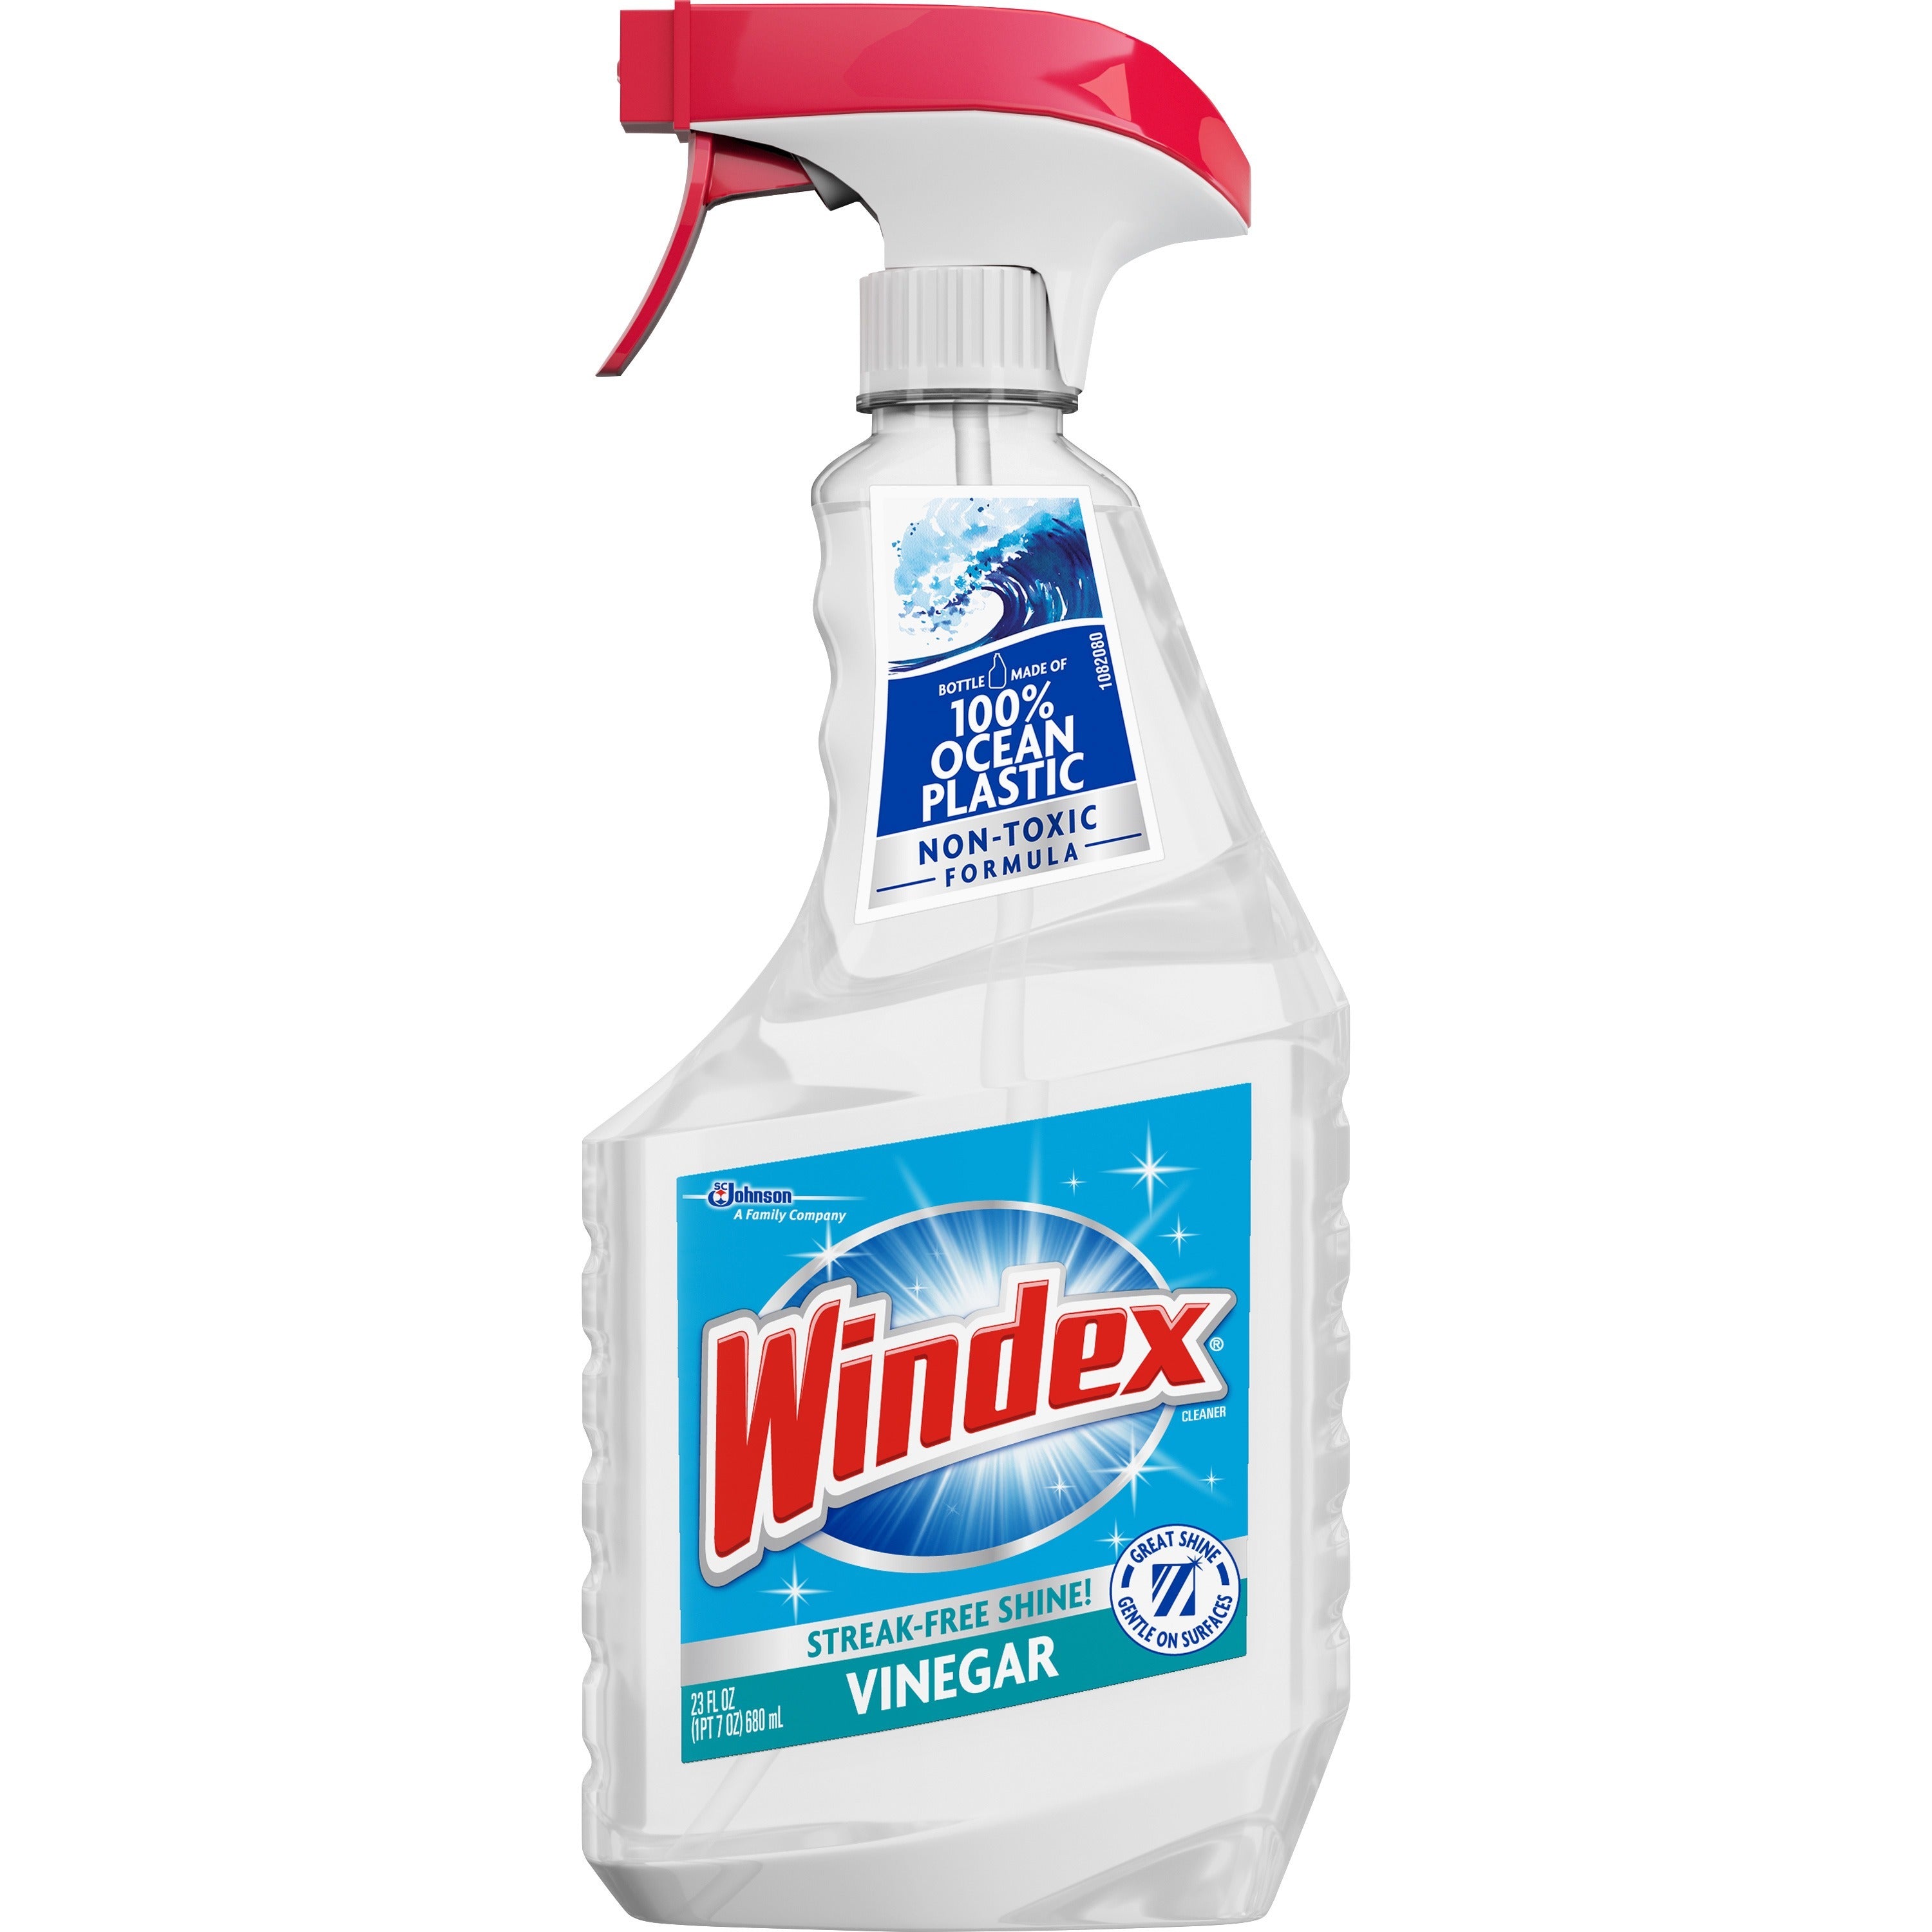 Windex Vinegar MultiSurface Spray - 23 fl oz (0.7 quart) - Clean & Fresh Scent - 8 / Carton - Ammonia-free, Streak-free, Versatile - Clear